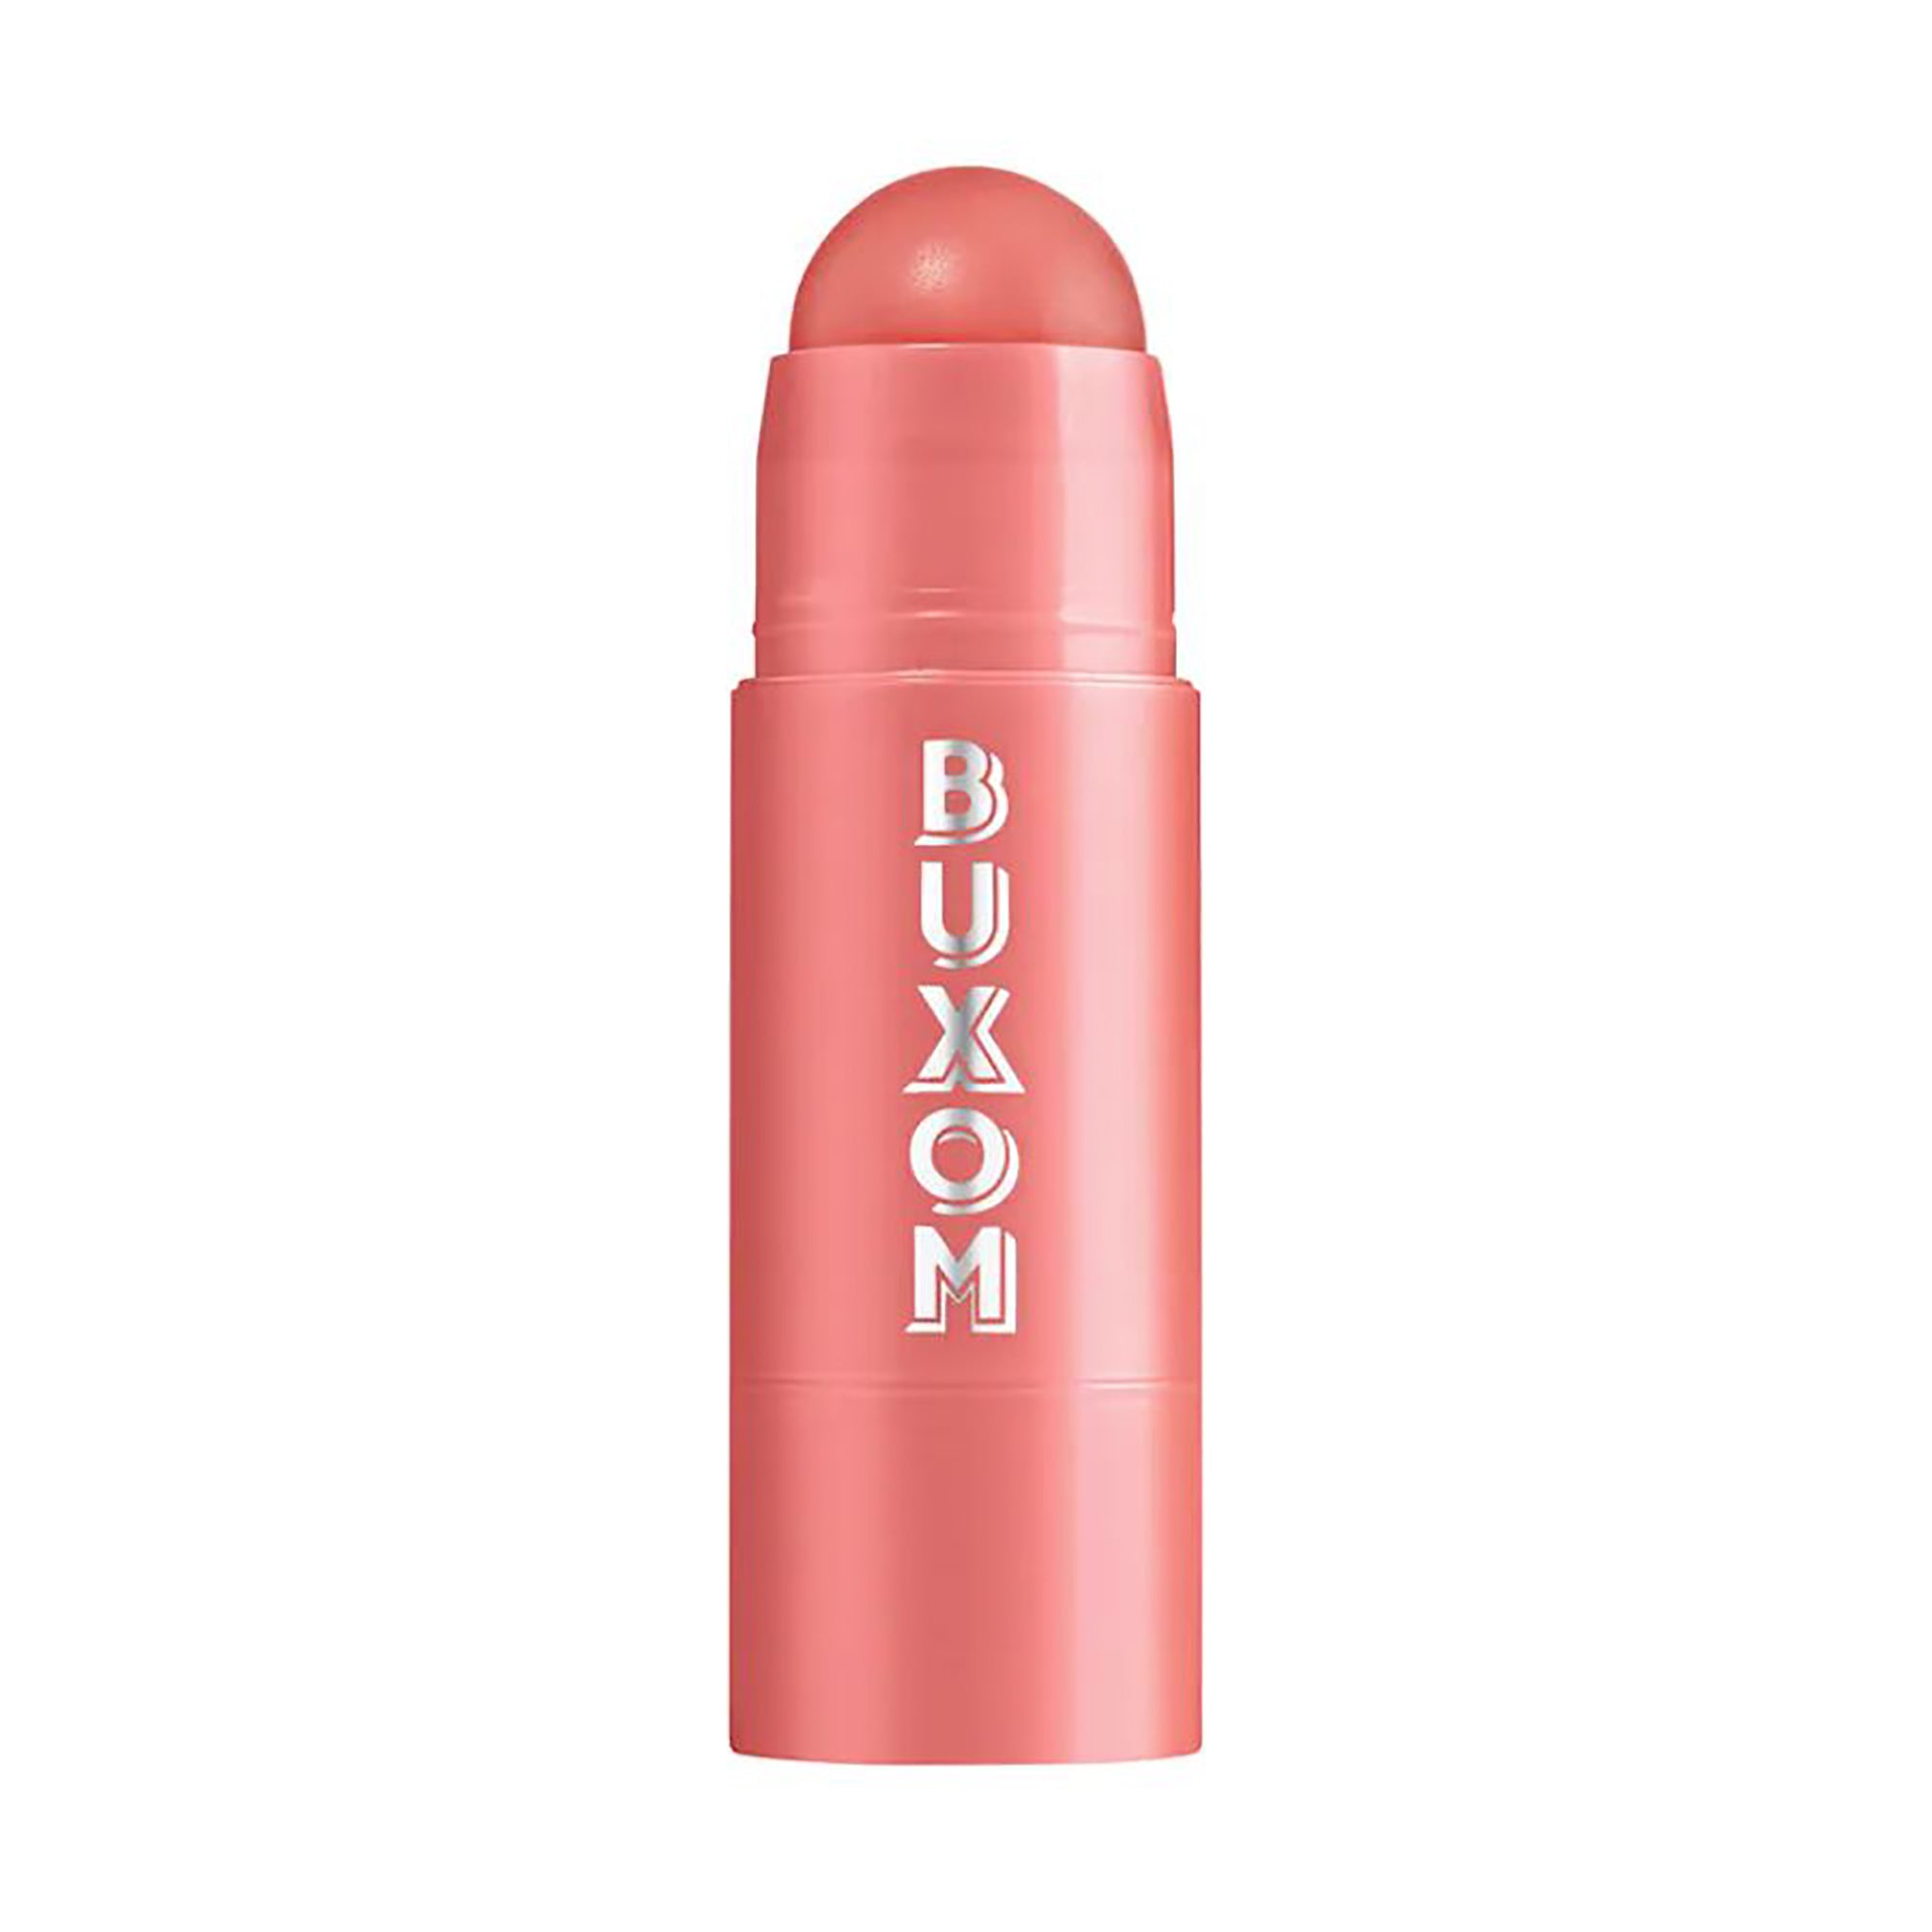  Buxom Power Plump Lip Balm / FIRST CRUSH